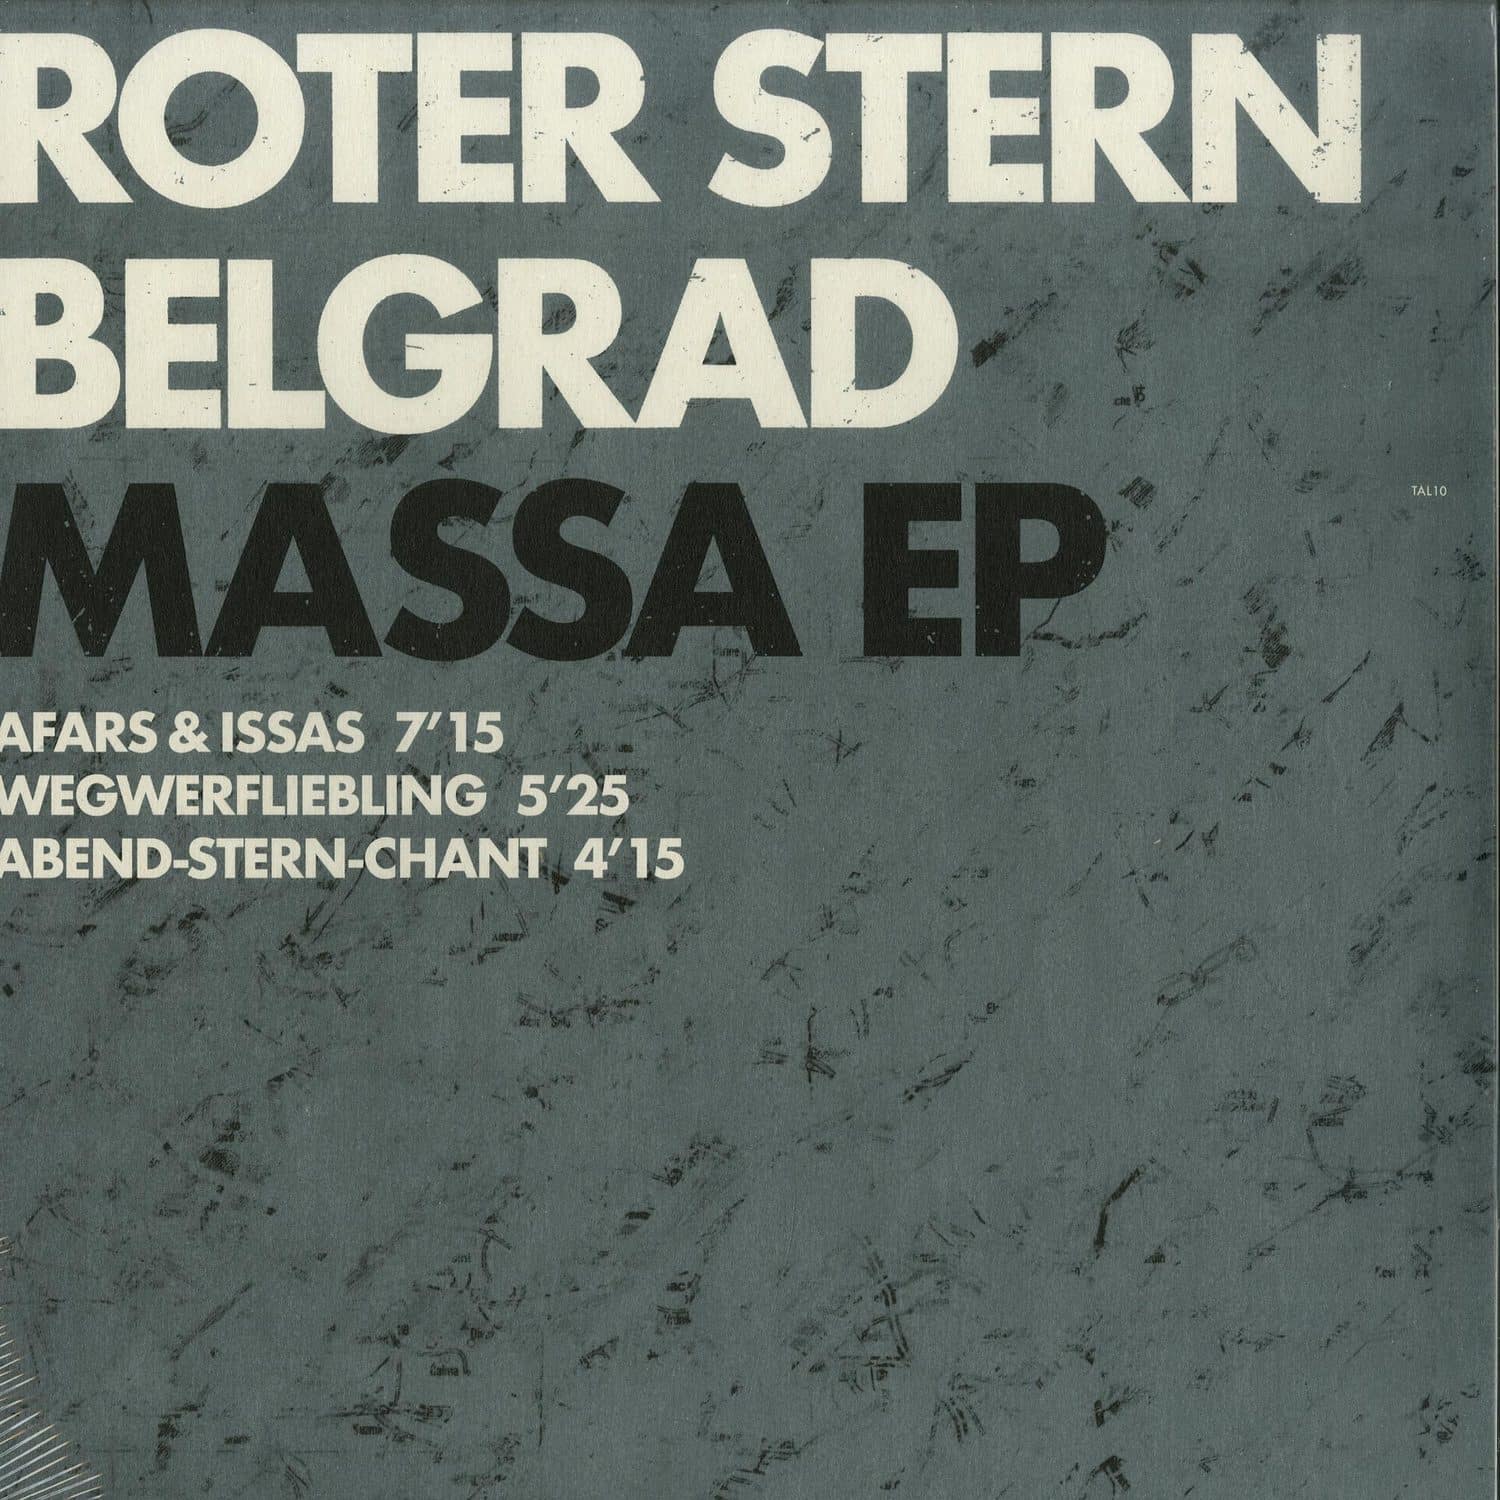 Roter Stern Belgrad - MASSA EP 